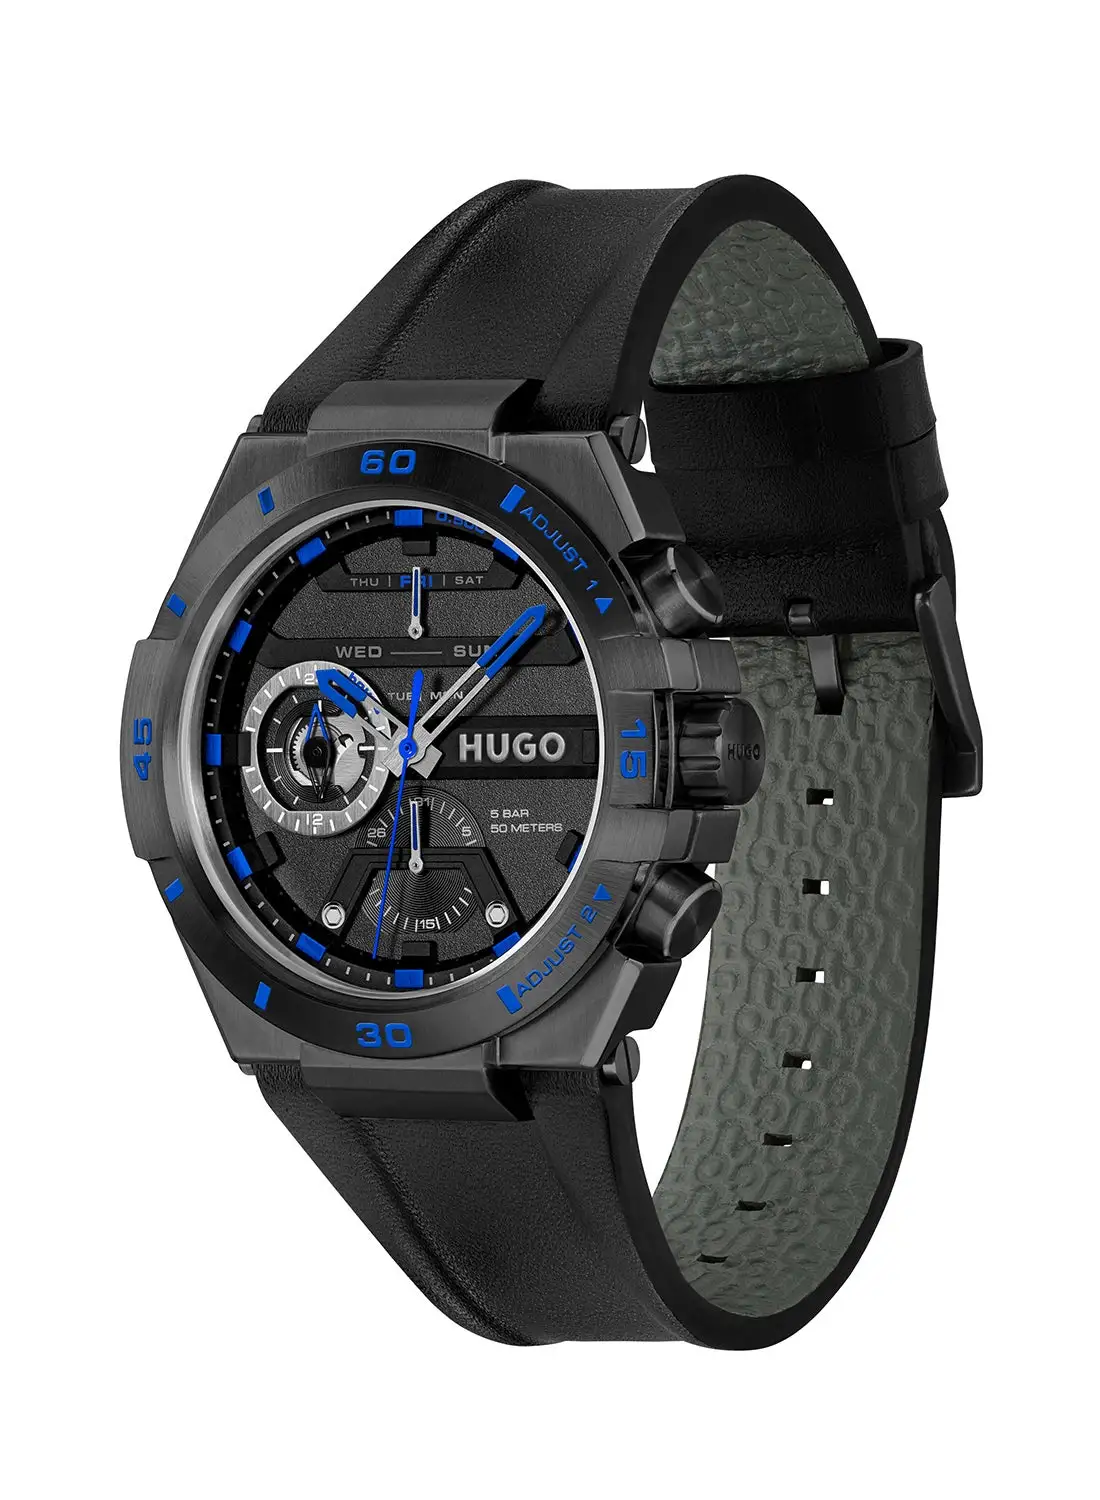 HUGO BOSS Men's Analog Round Shape Leather Wrist Watch 1530341 - 46 Mm